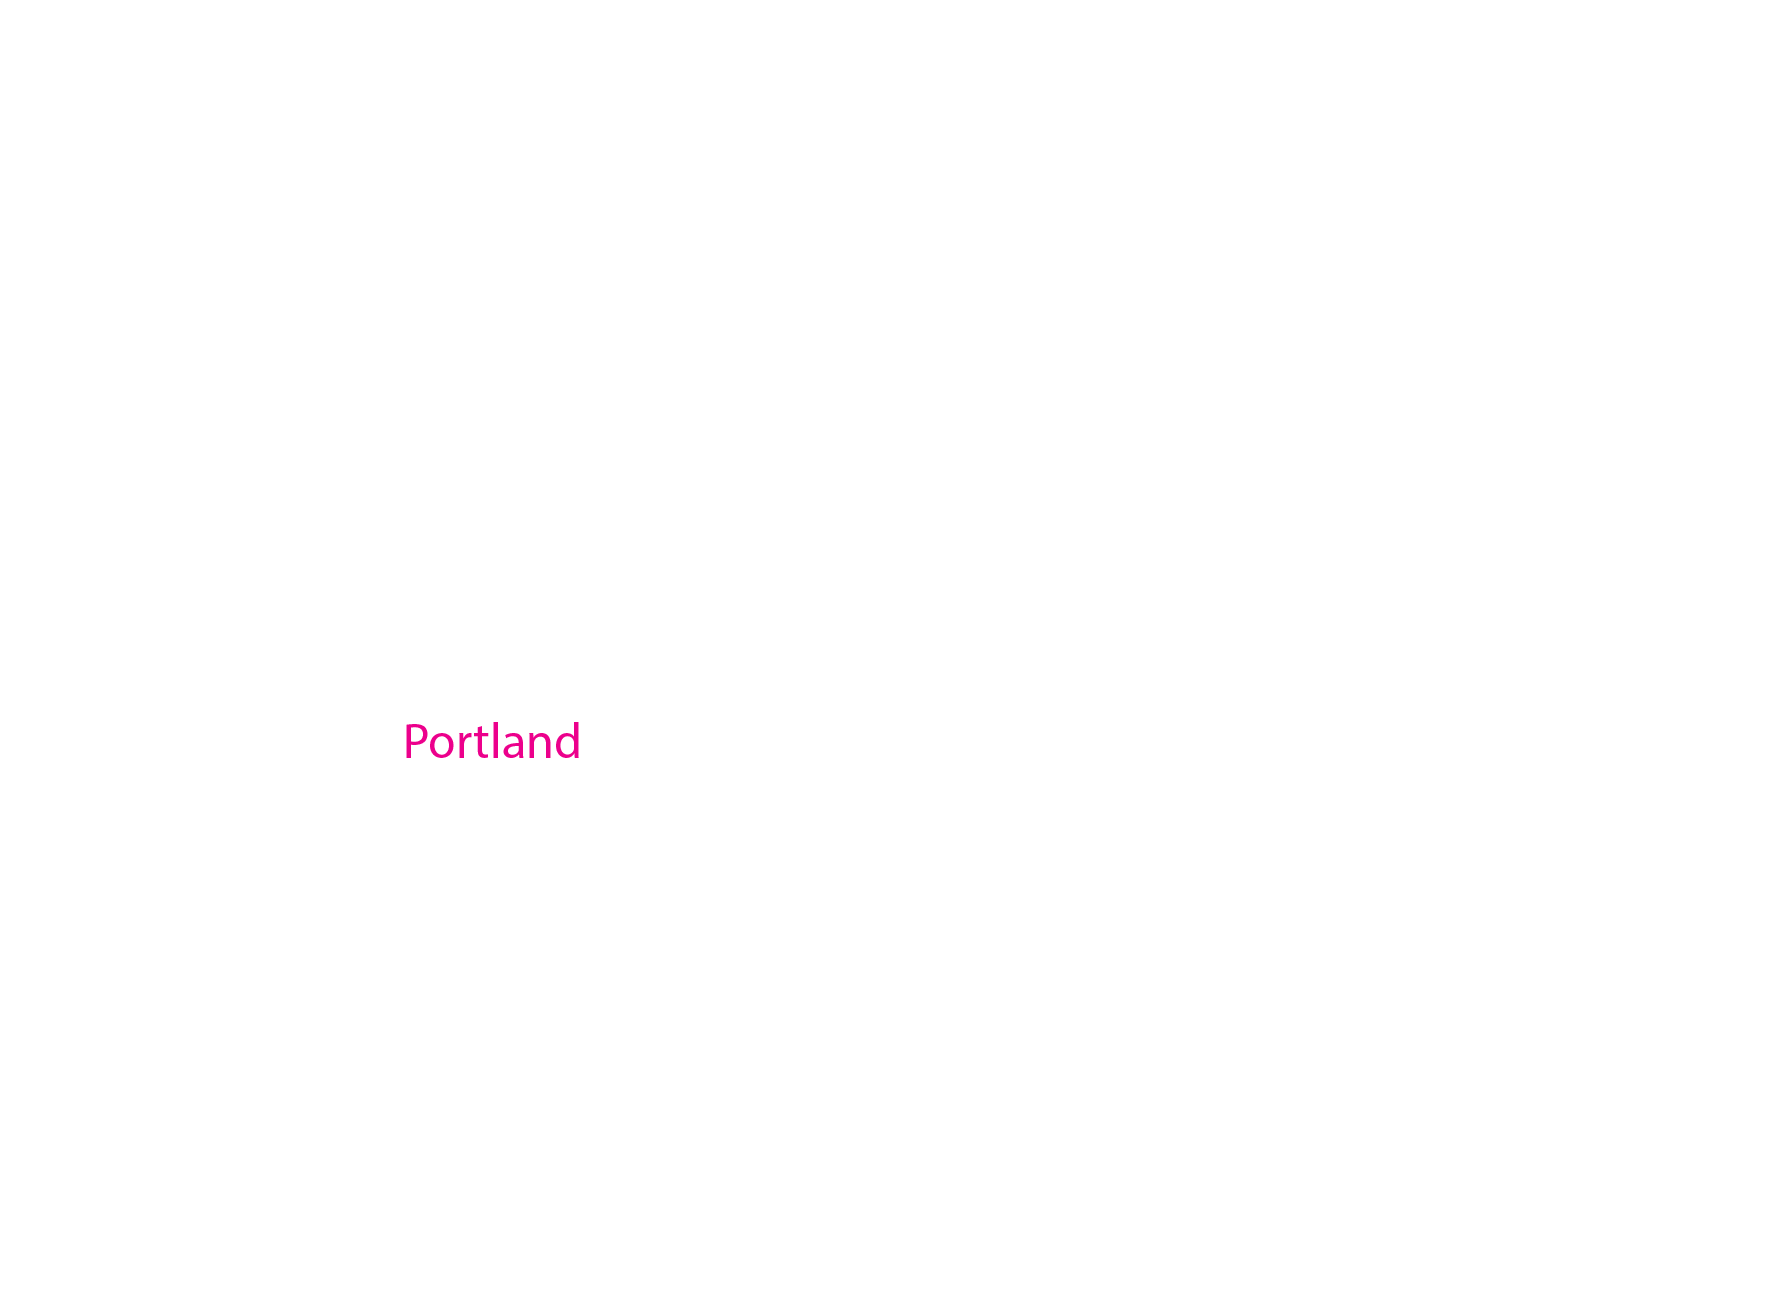 Portland label